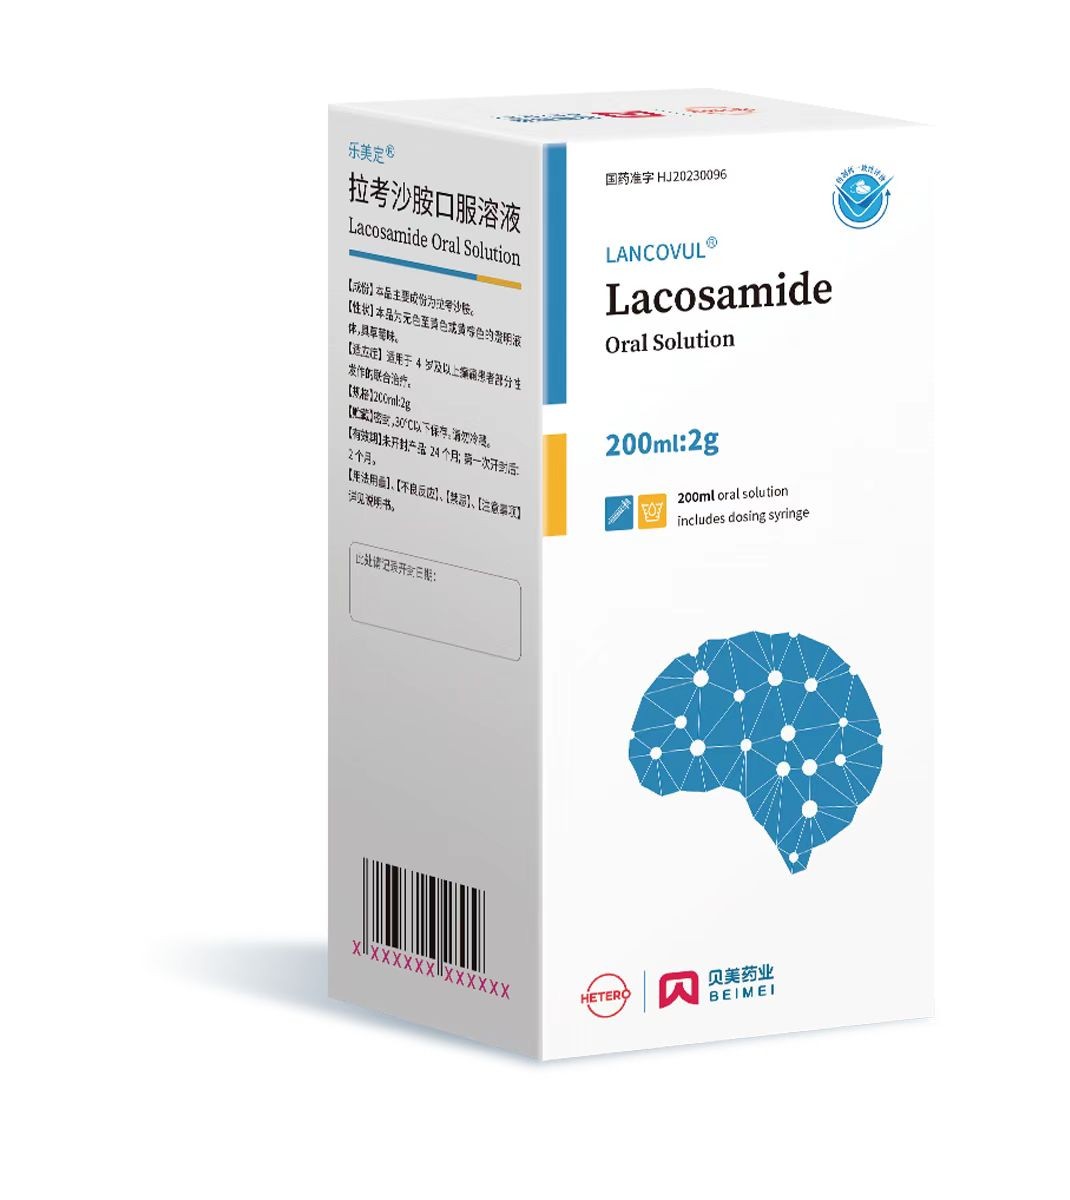 Lacosamide Oral Solution